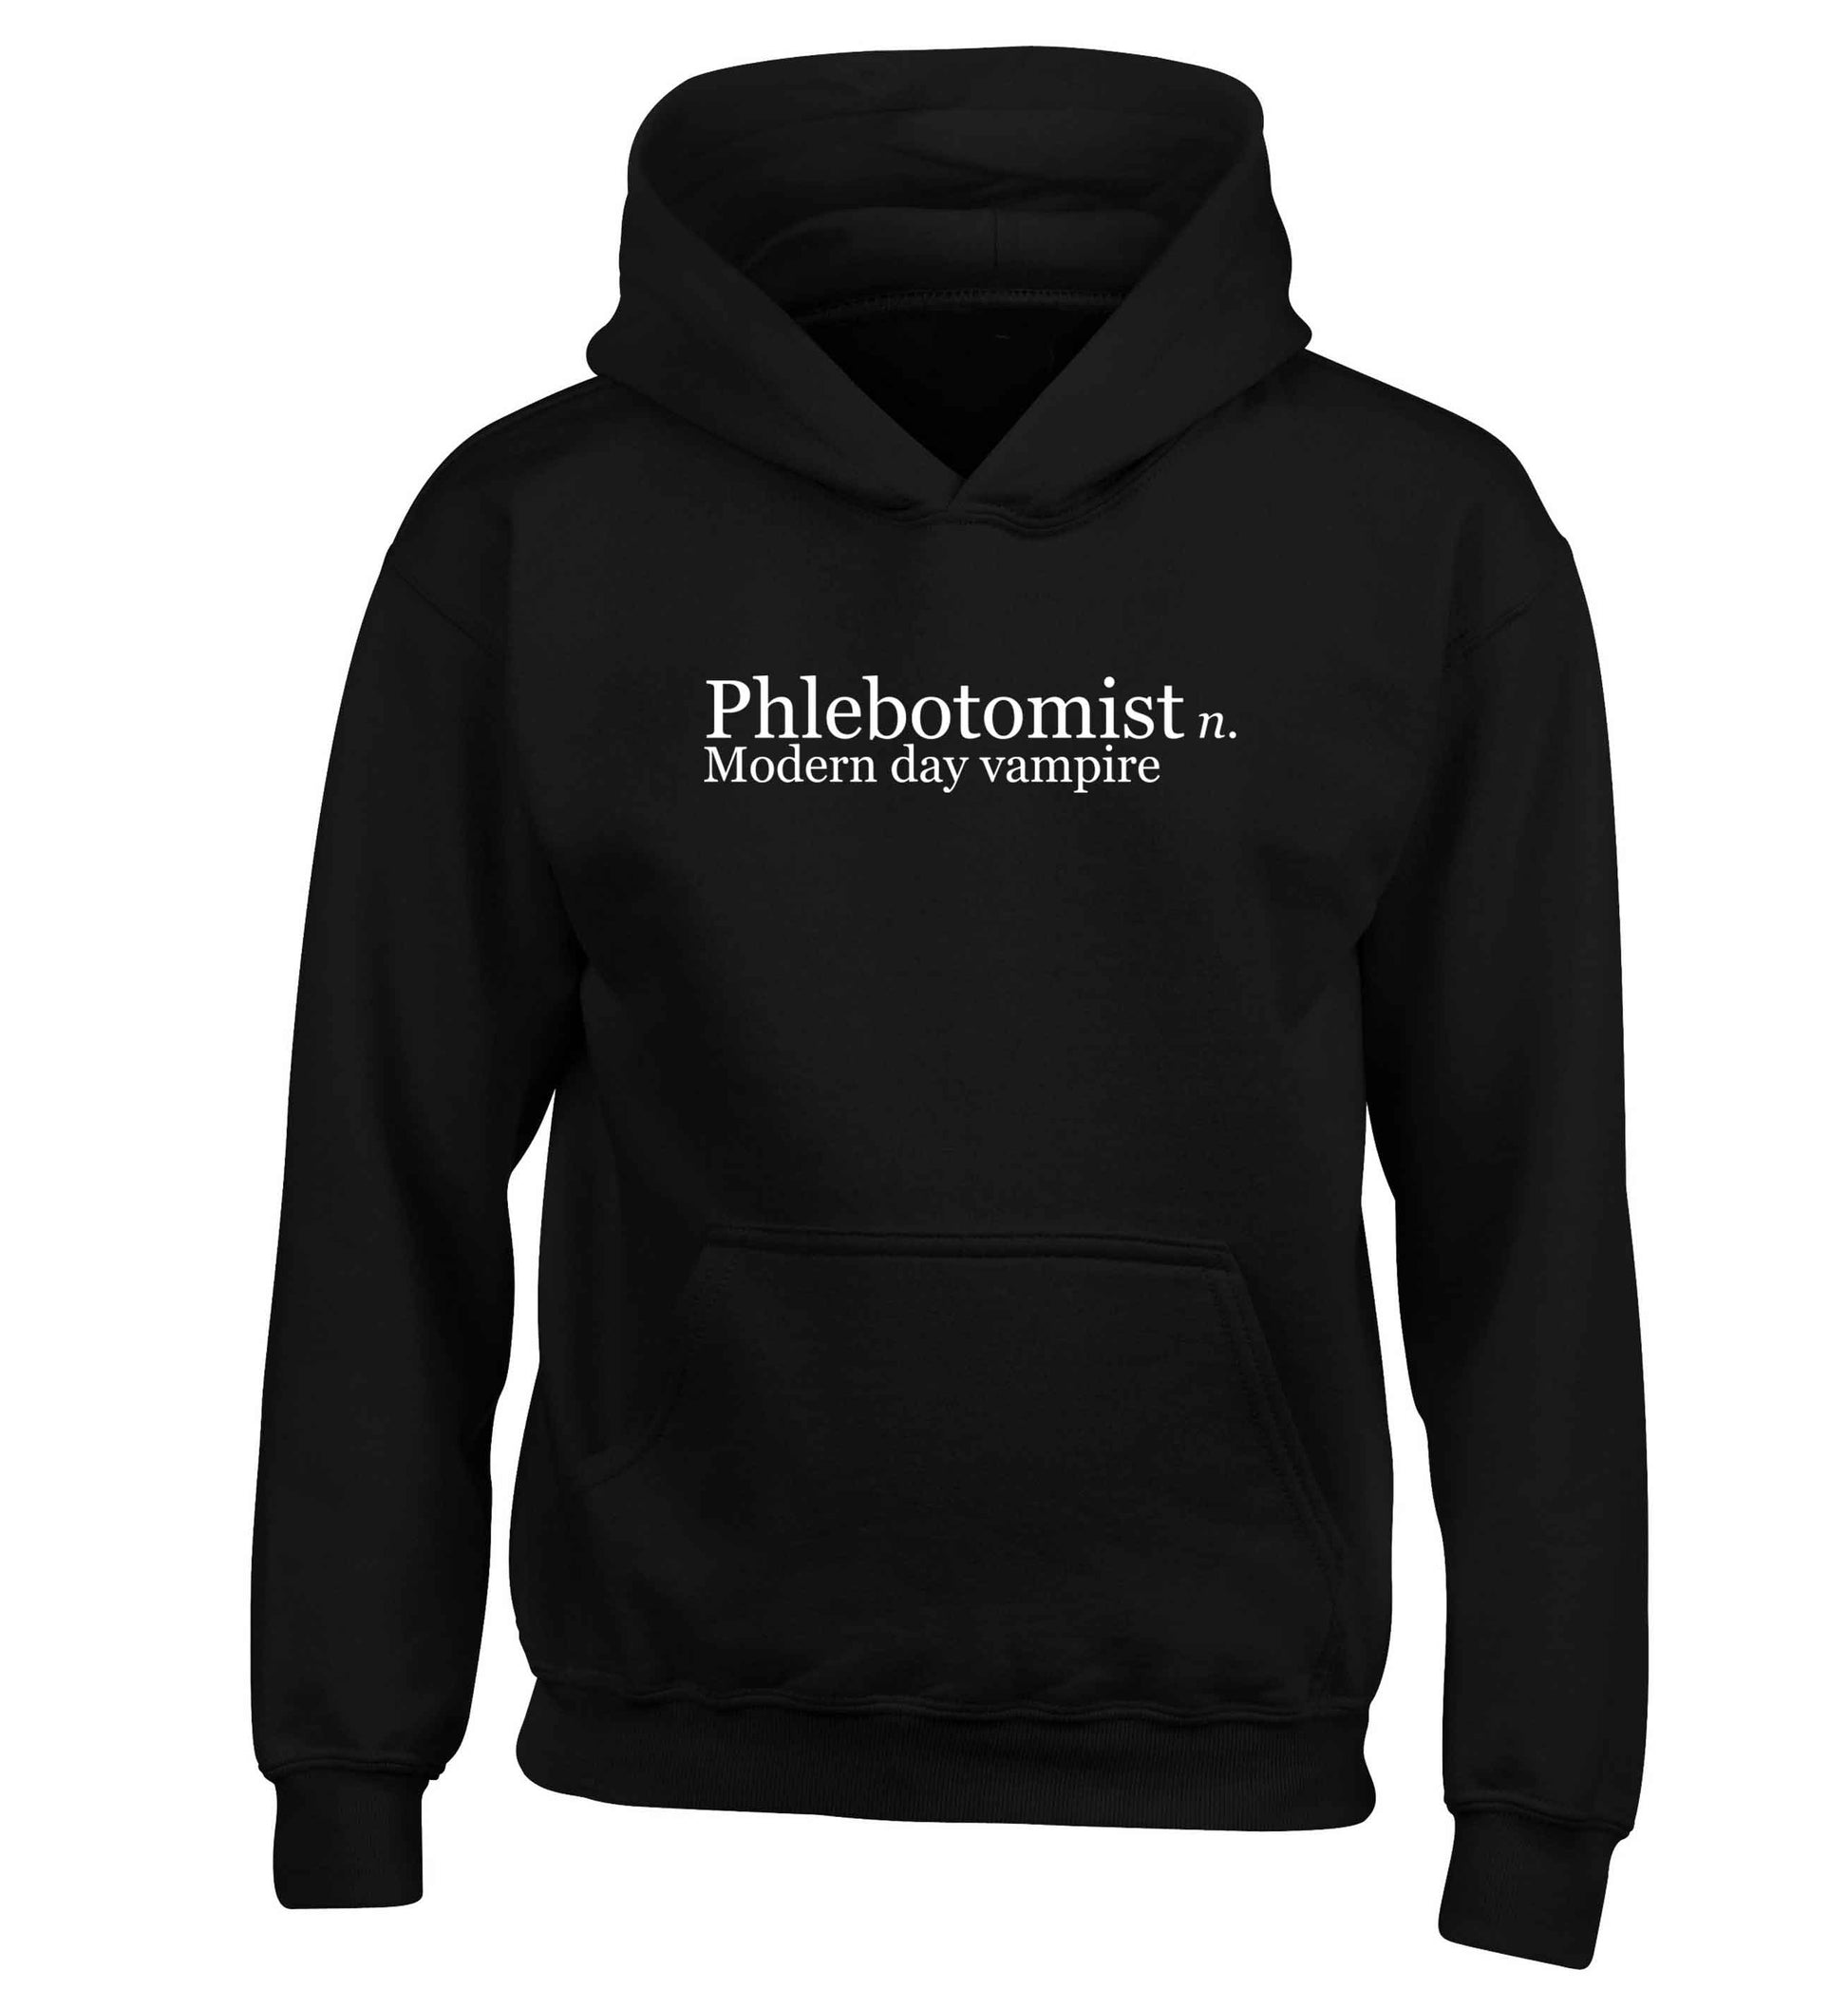 Phlebotomist - Modern day vampire children's black hoodie 12-13 Years